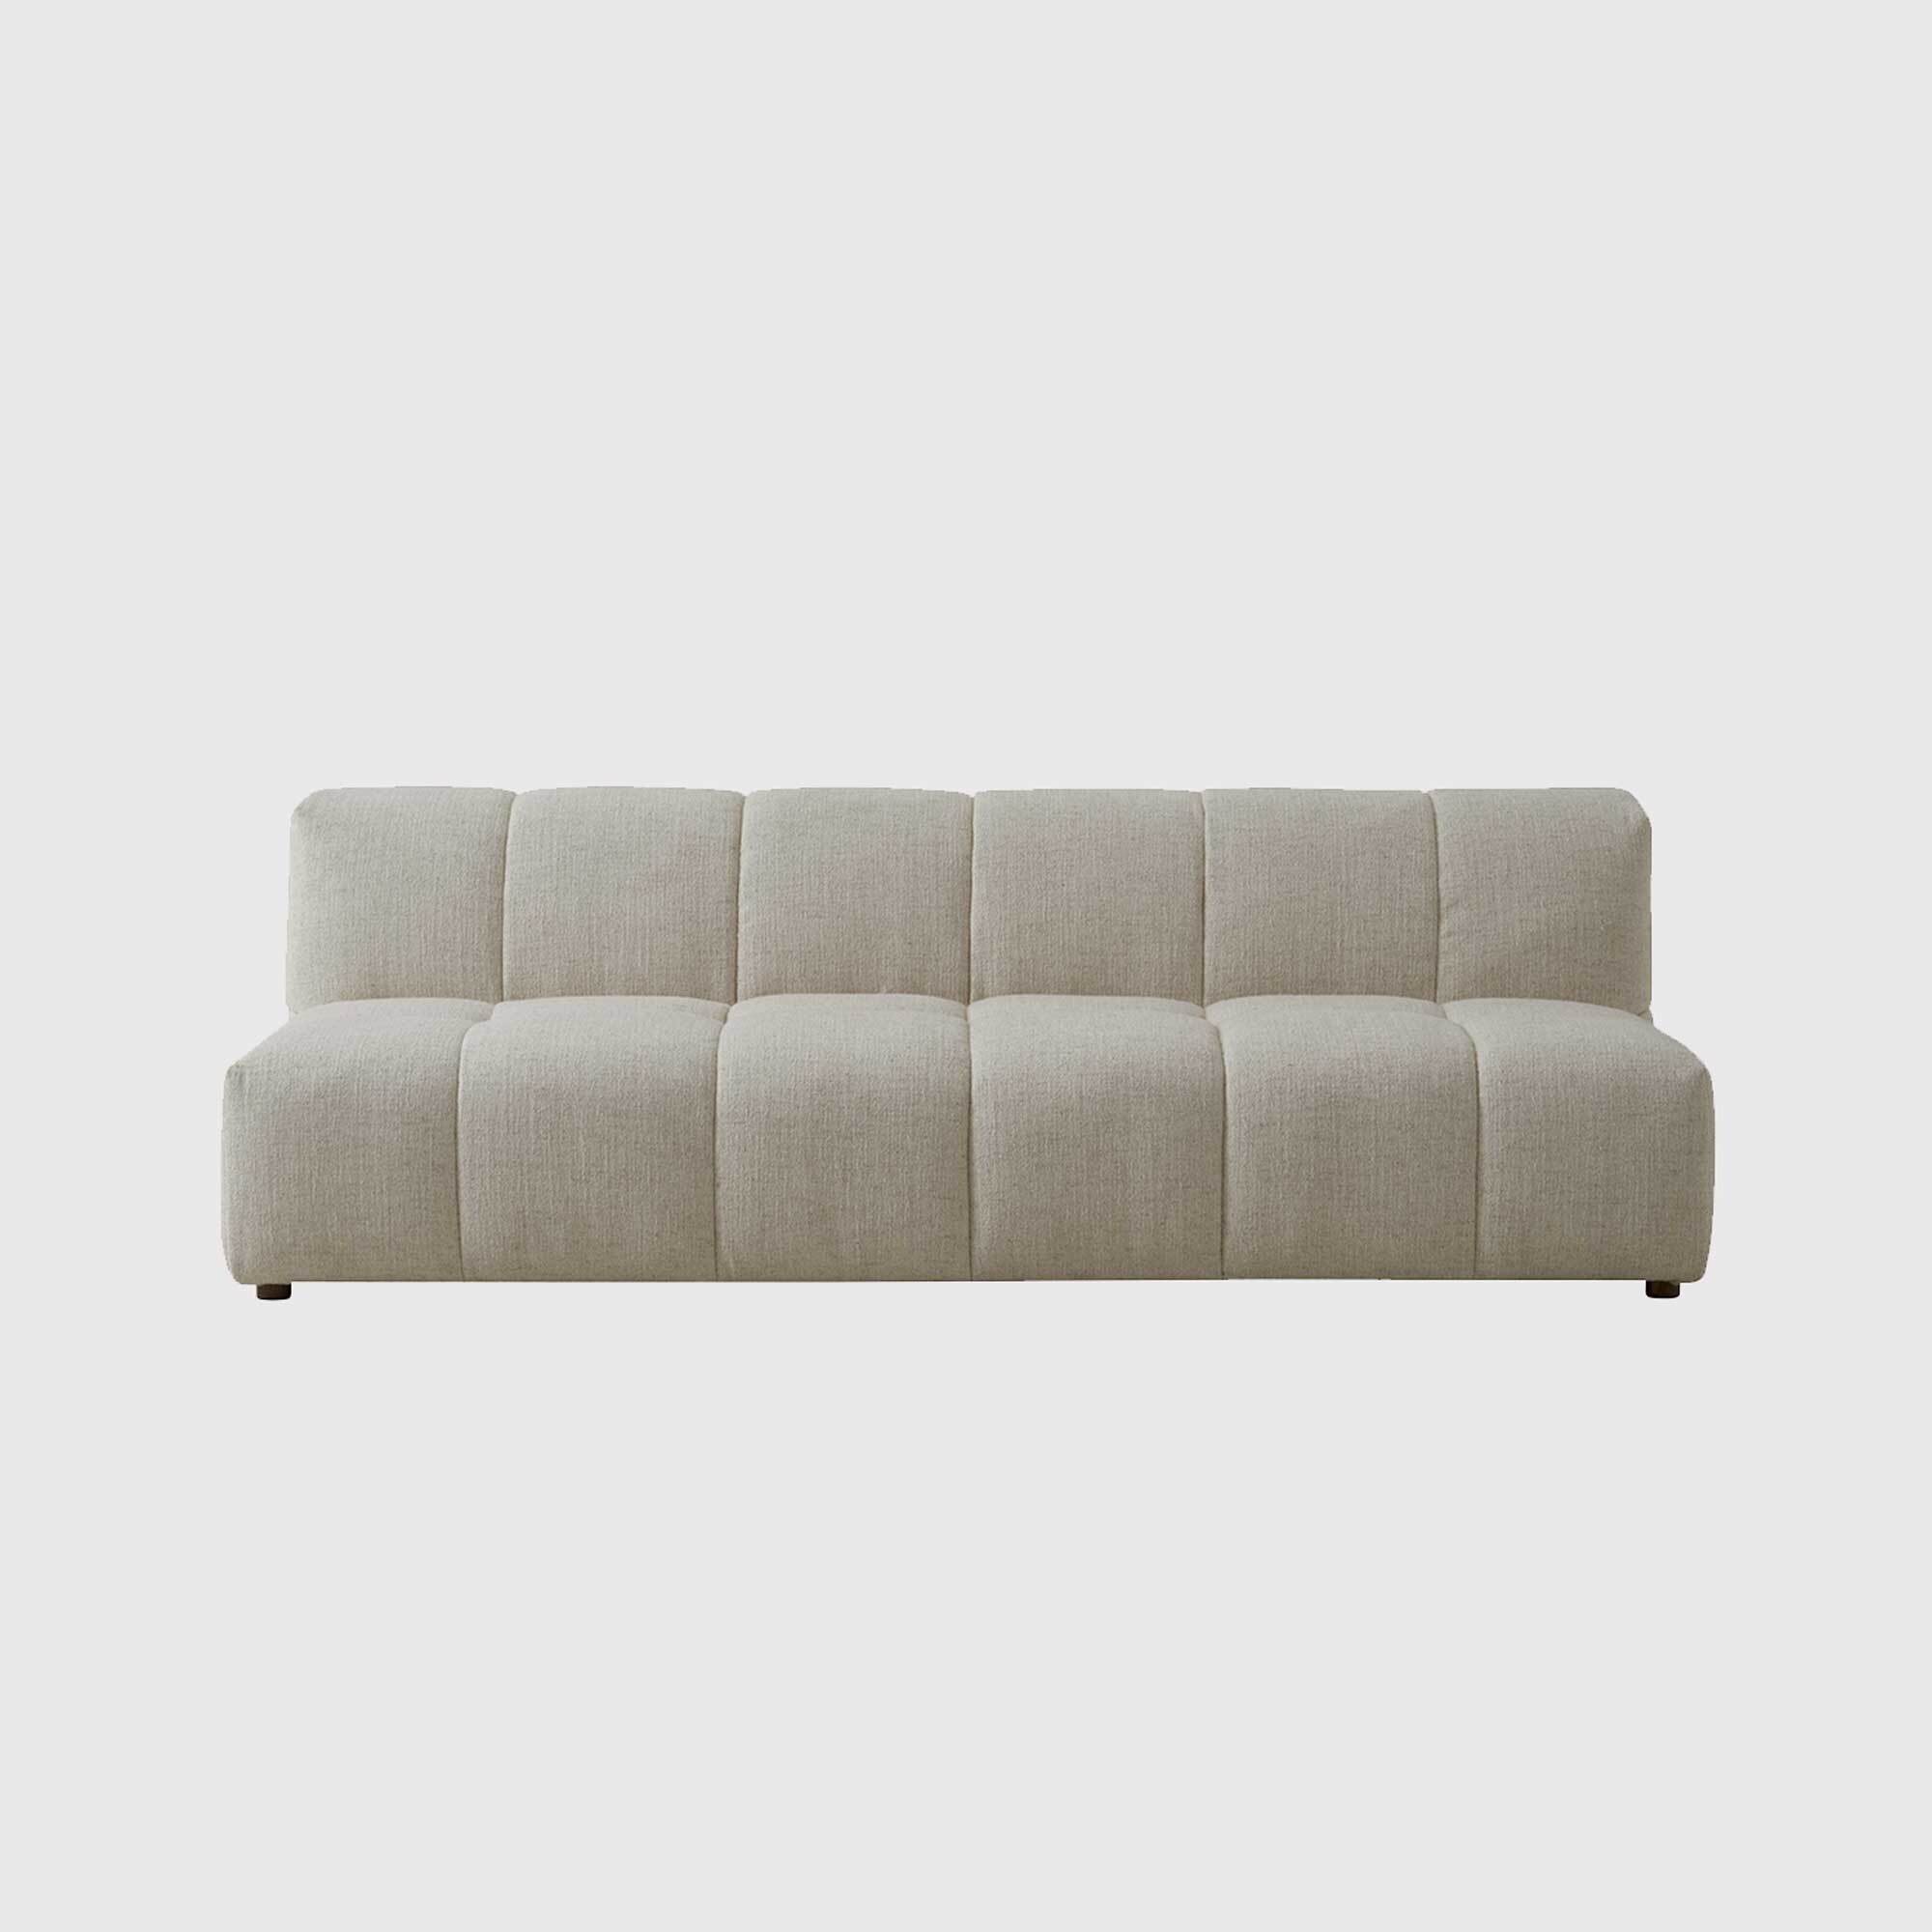 Plensa Section 2 Seater Modular Sofa, Neutral Fabric | Barker & Stonehouse